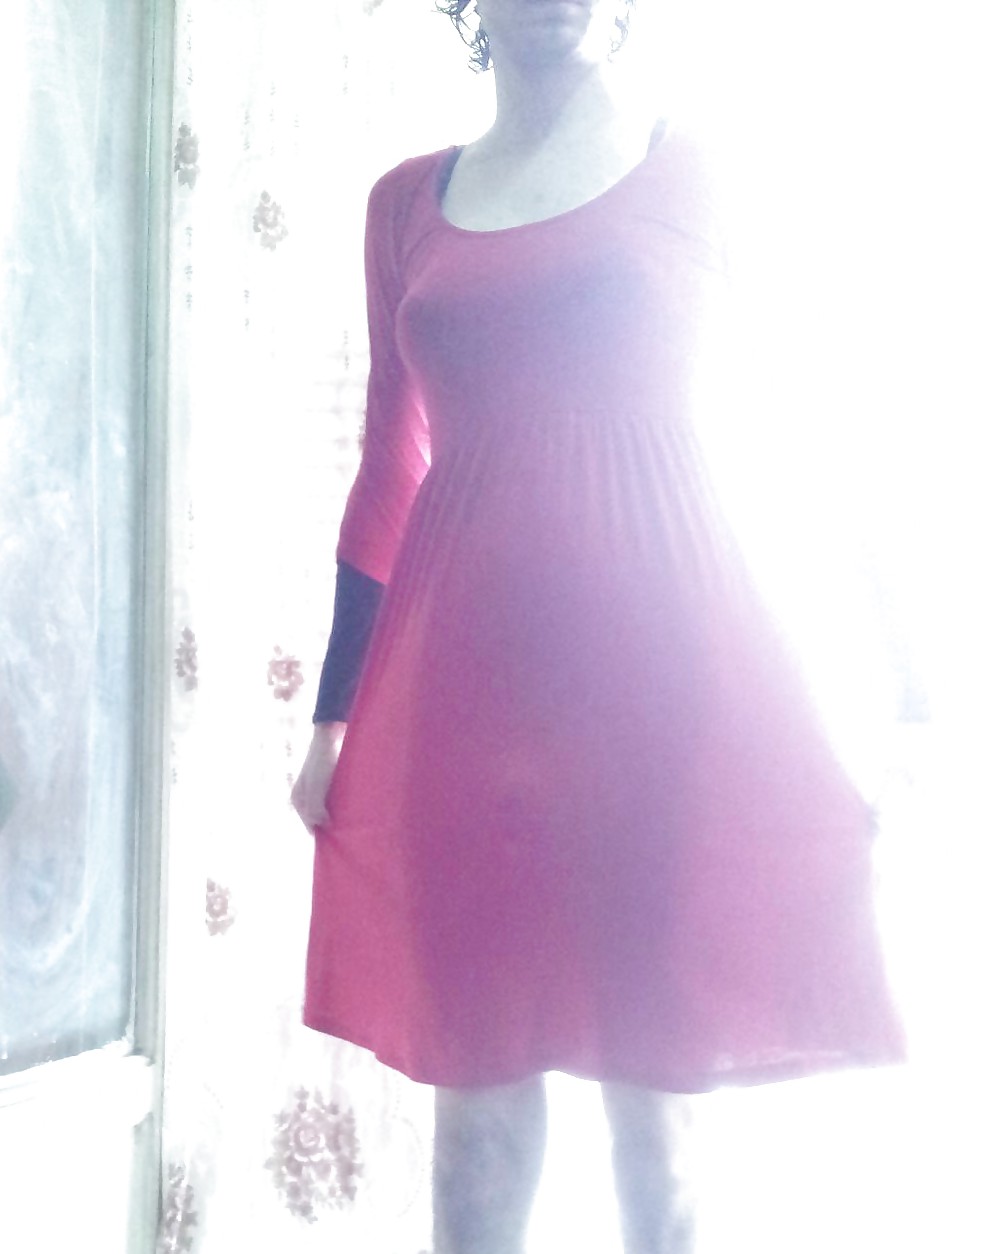 Red Dress Fun pict gal